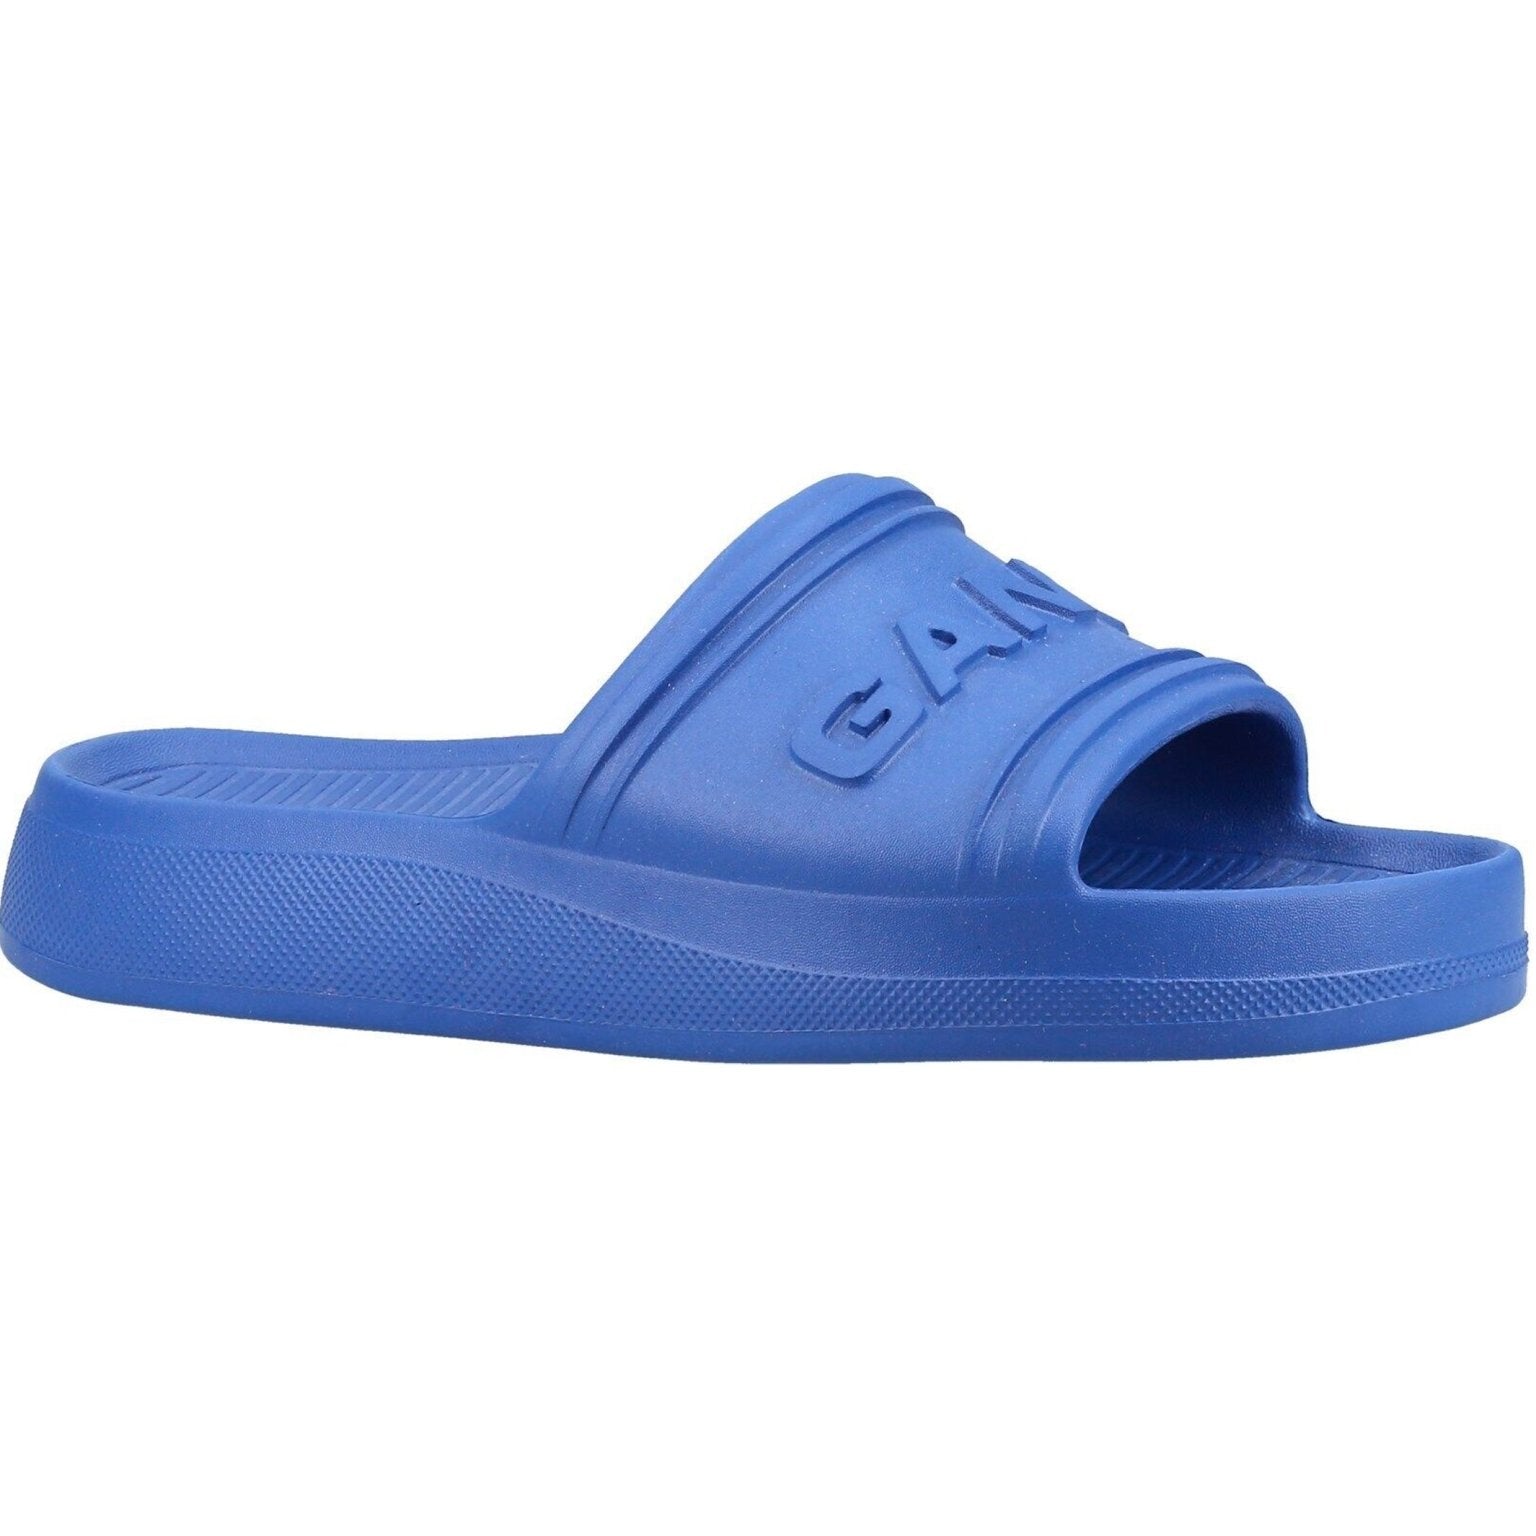 4elementsclothingGANTGANT - sports slide / Sandal - Gant Jaxter mens premium Slides / flip flopShoes4056734696619